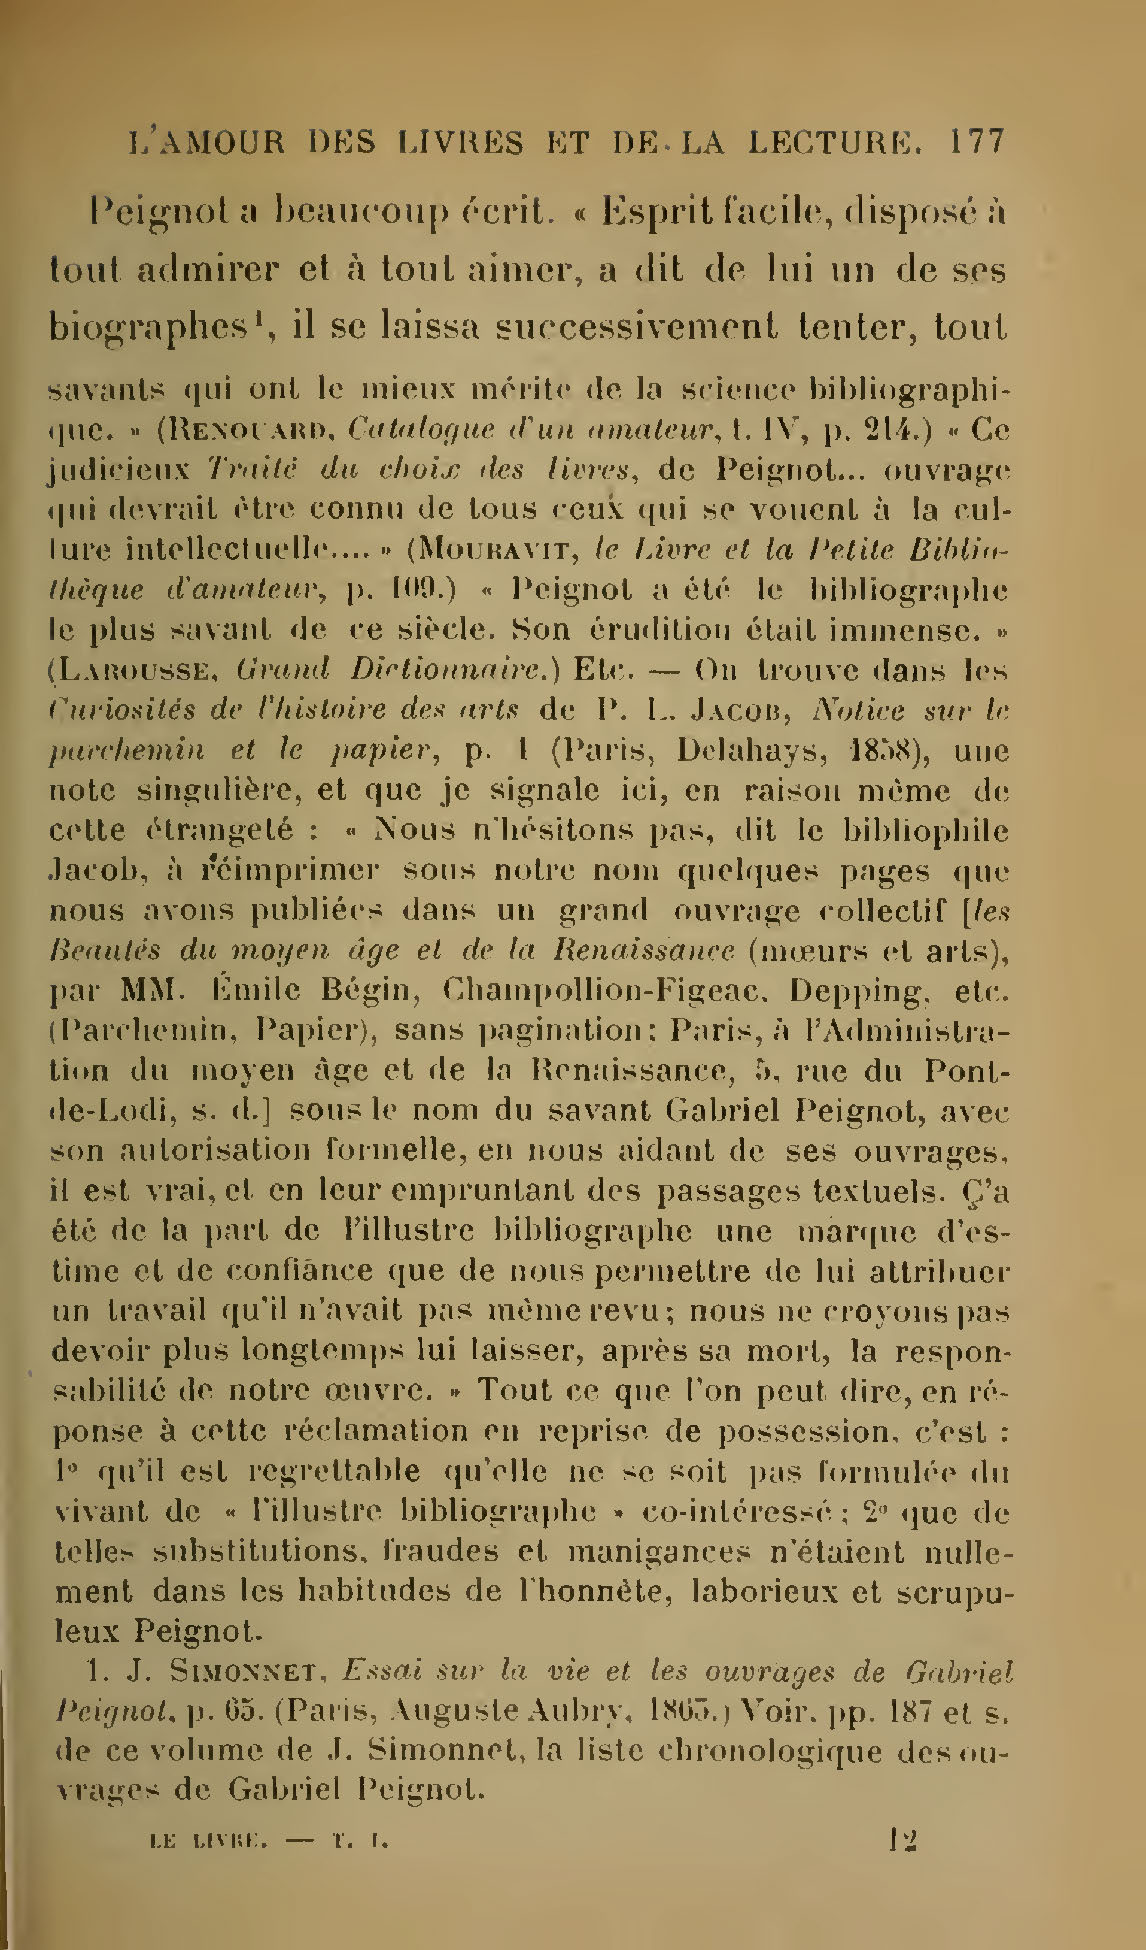 Albert Cim, Le Livre, t. I, p. 177.